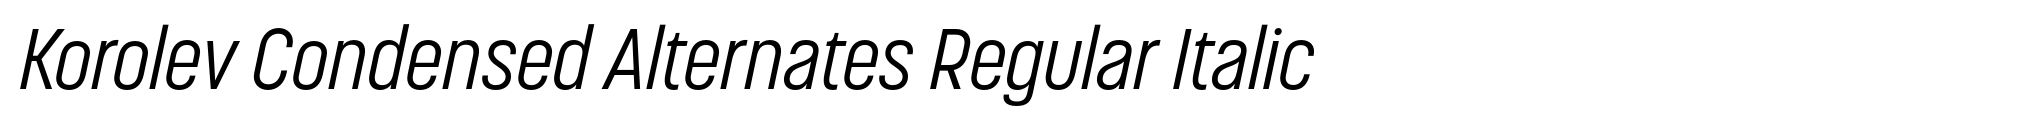 Korolev Condensed Alternates Regular Italic image